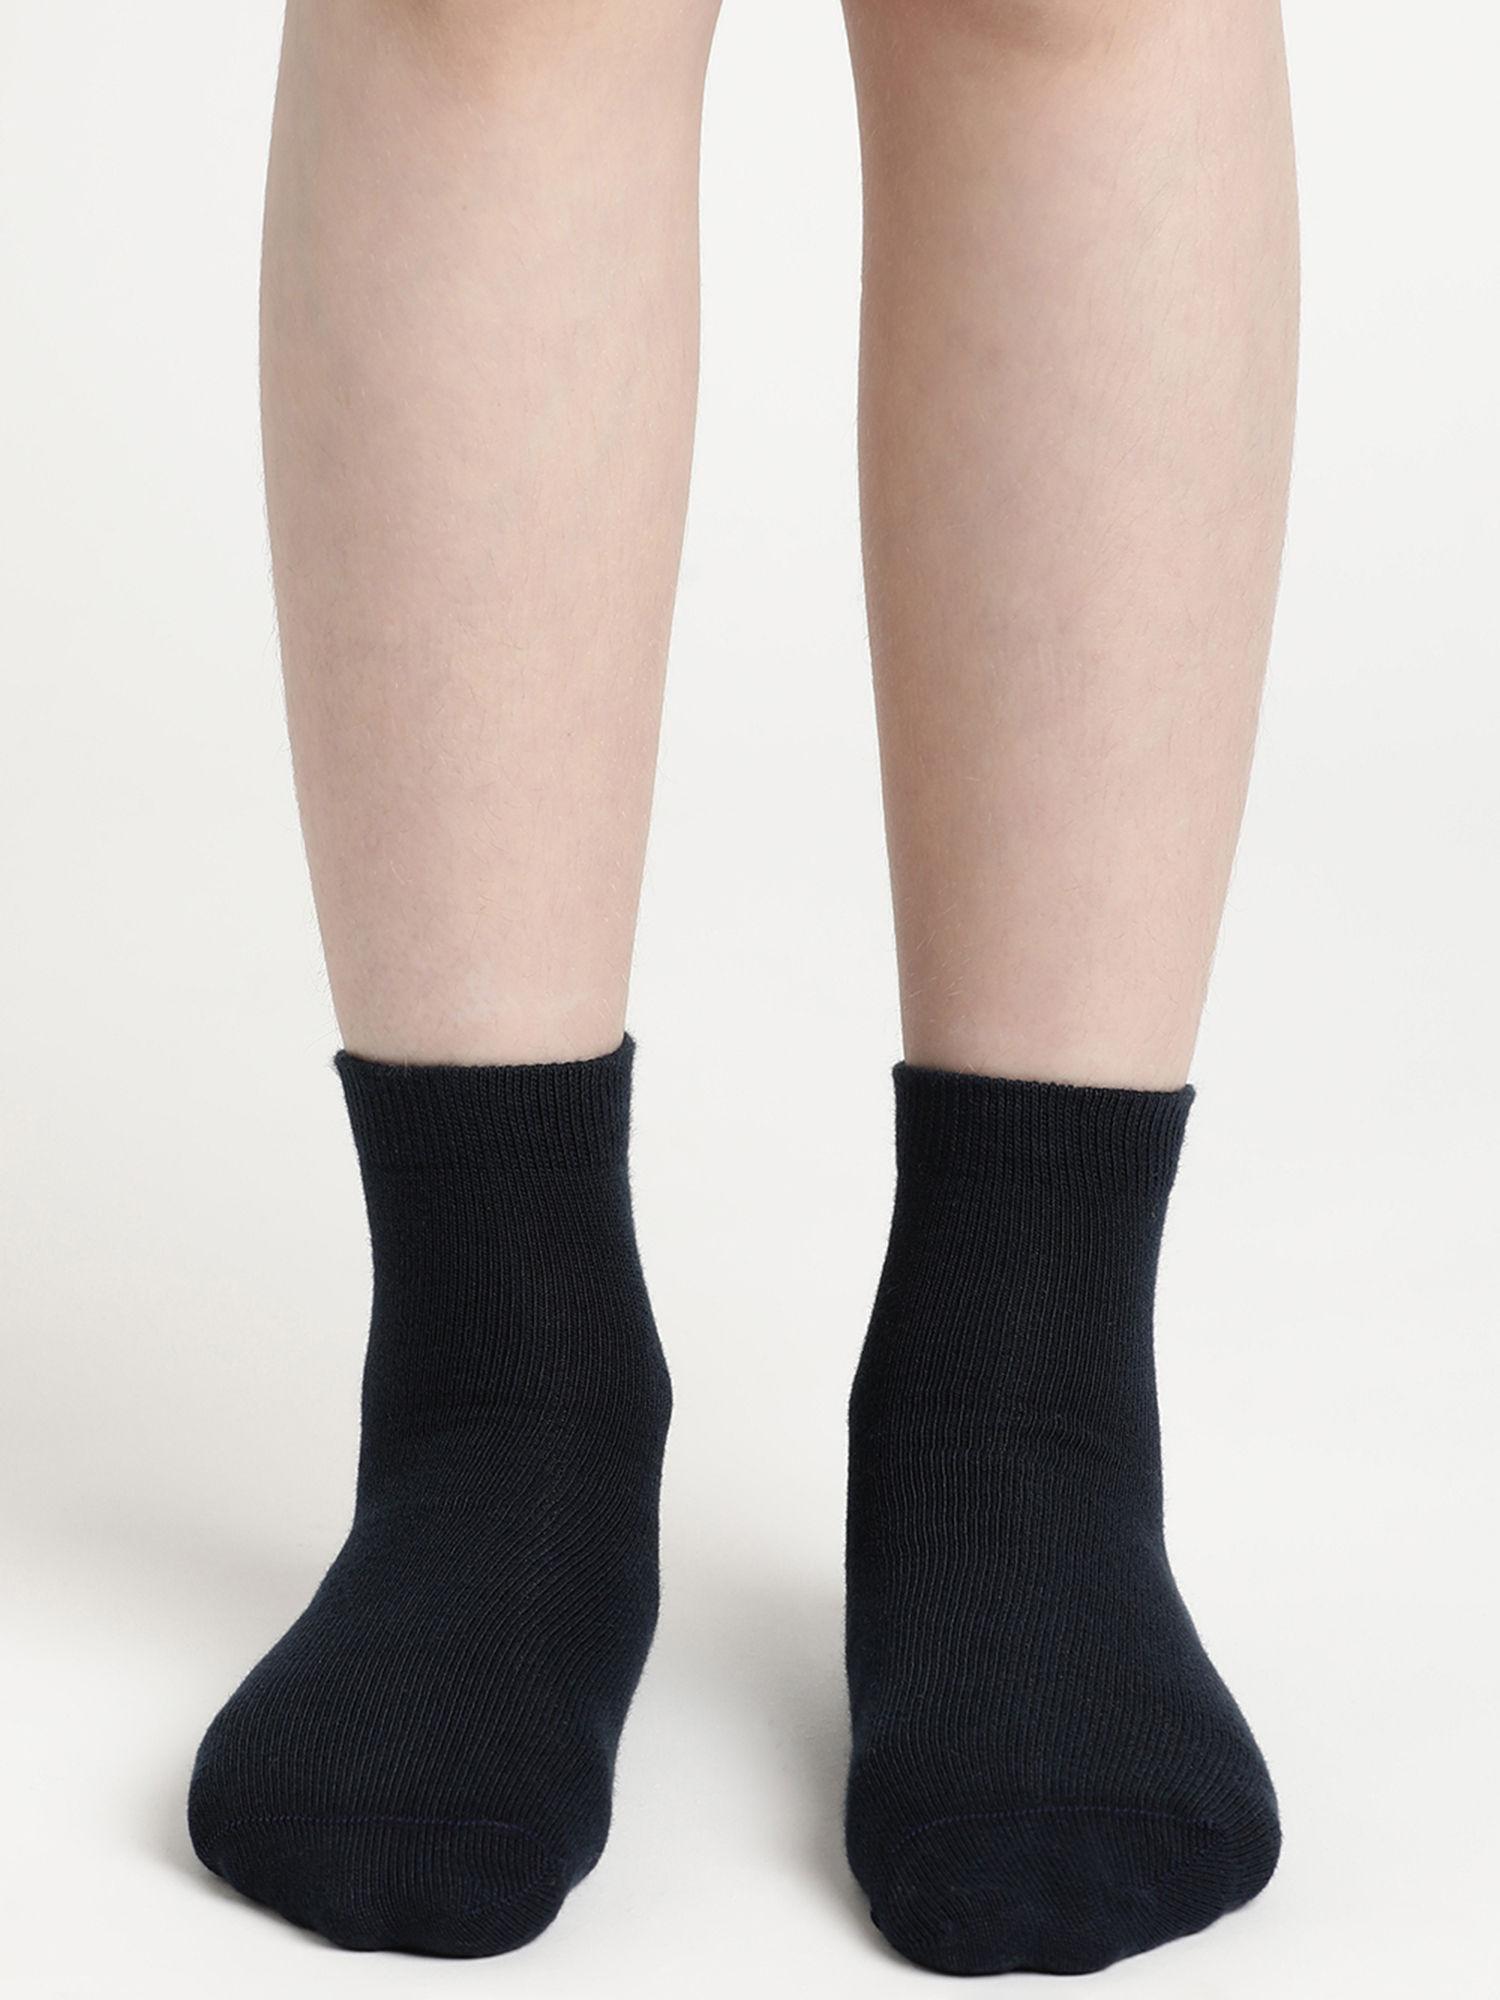 7801 Unisex Cotton Nylon Stretch Ankle Length Socks - Black